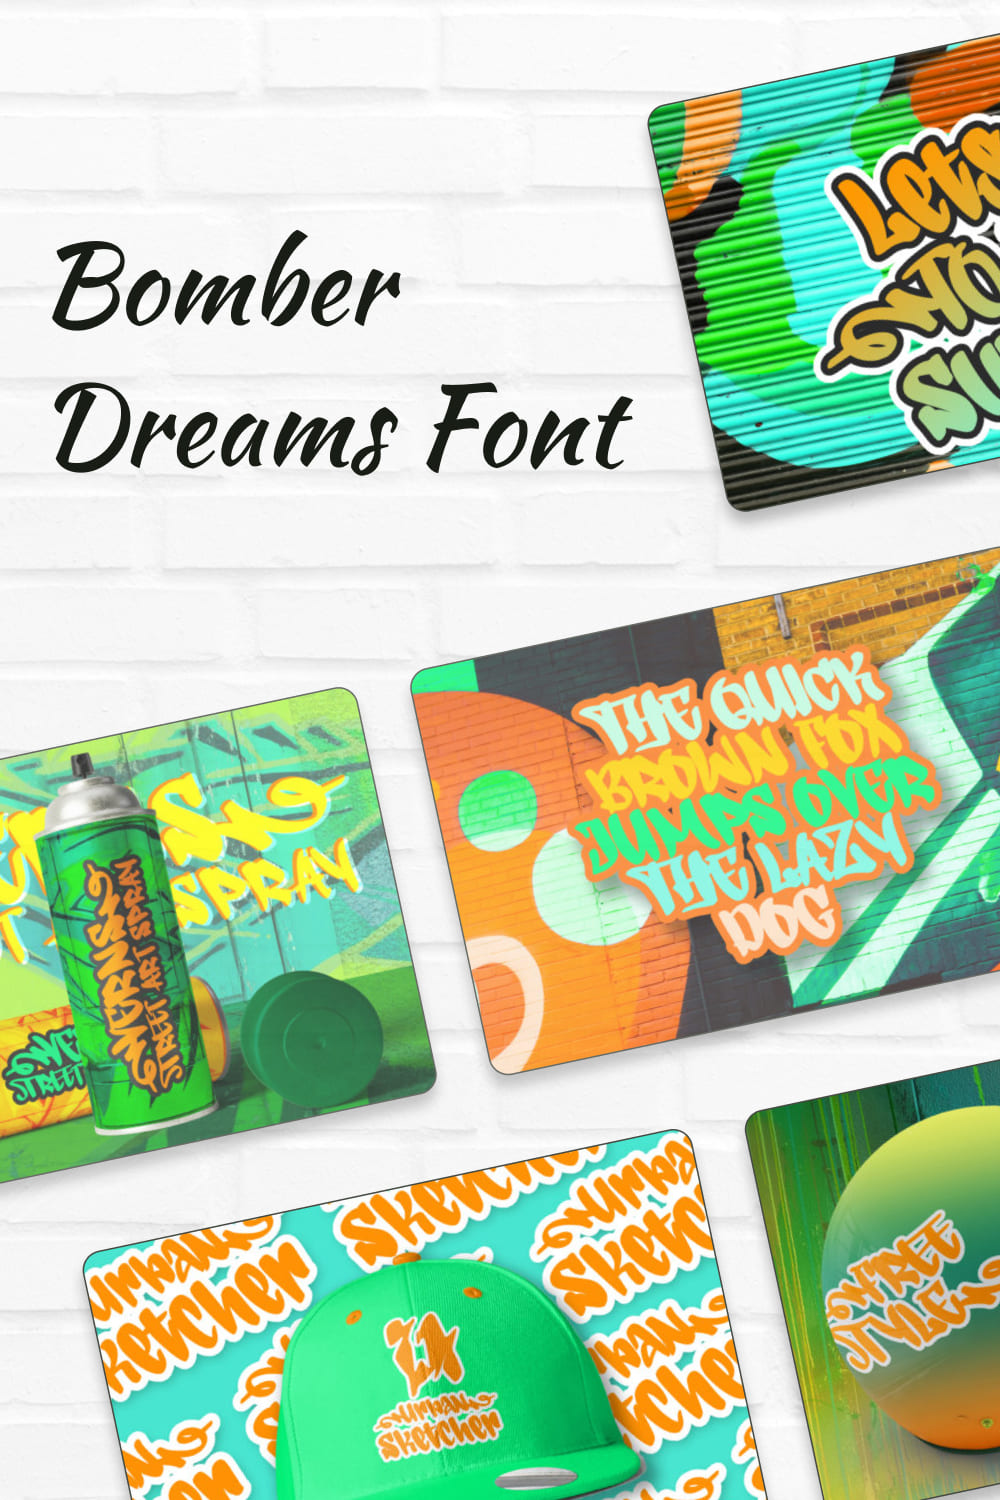 Bomber Dreams Font - Pinterest.